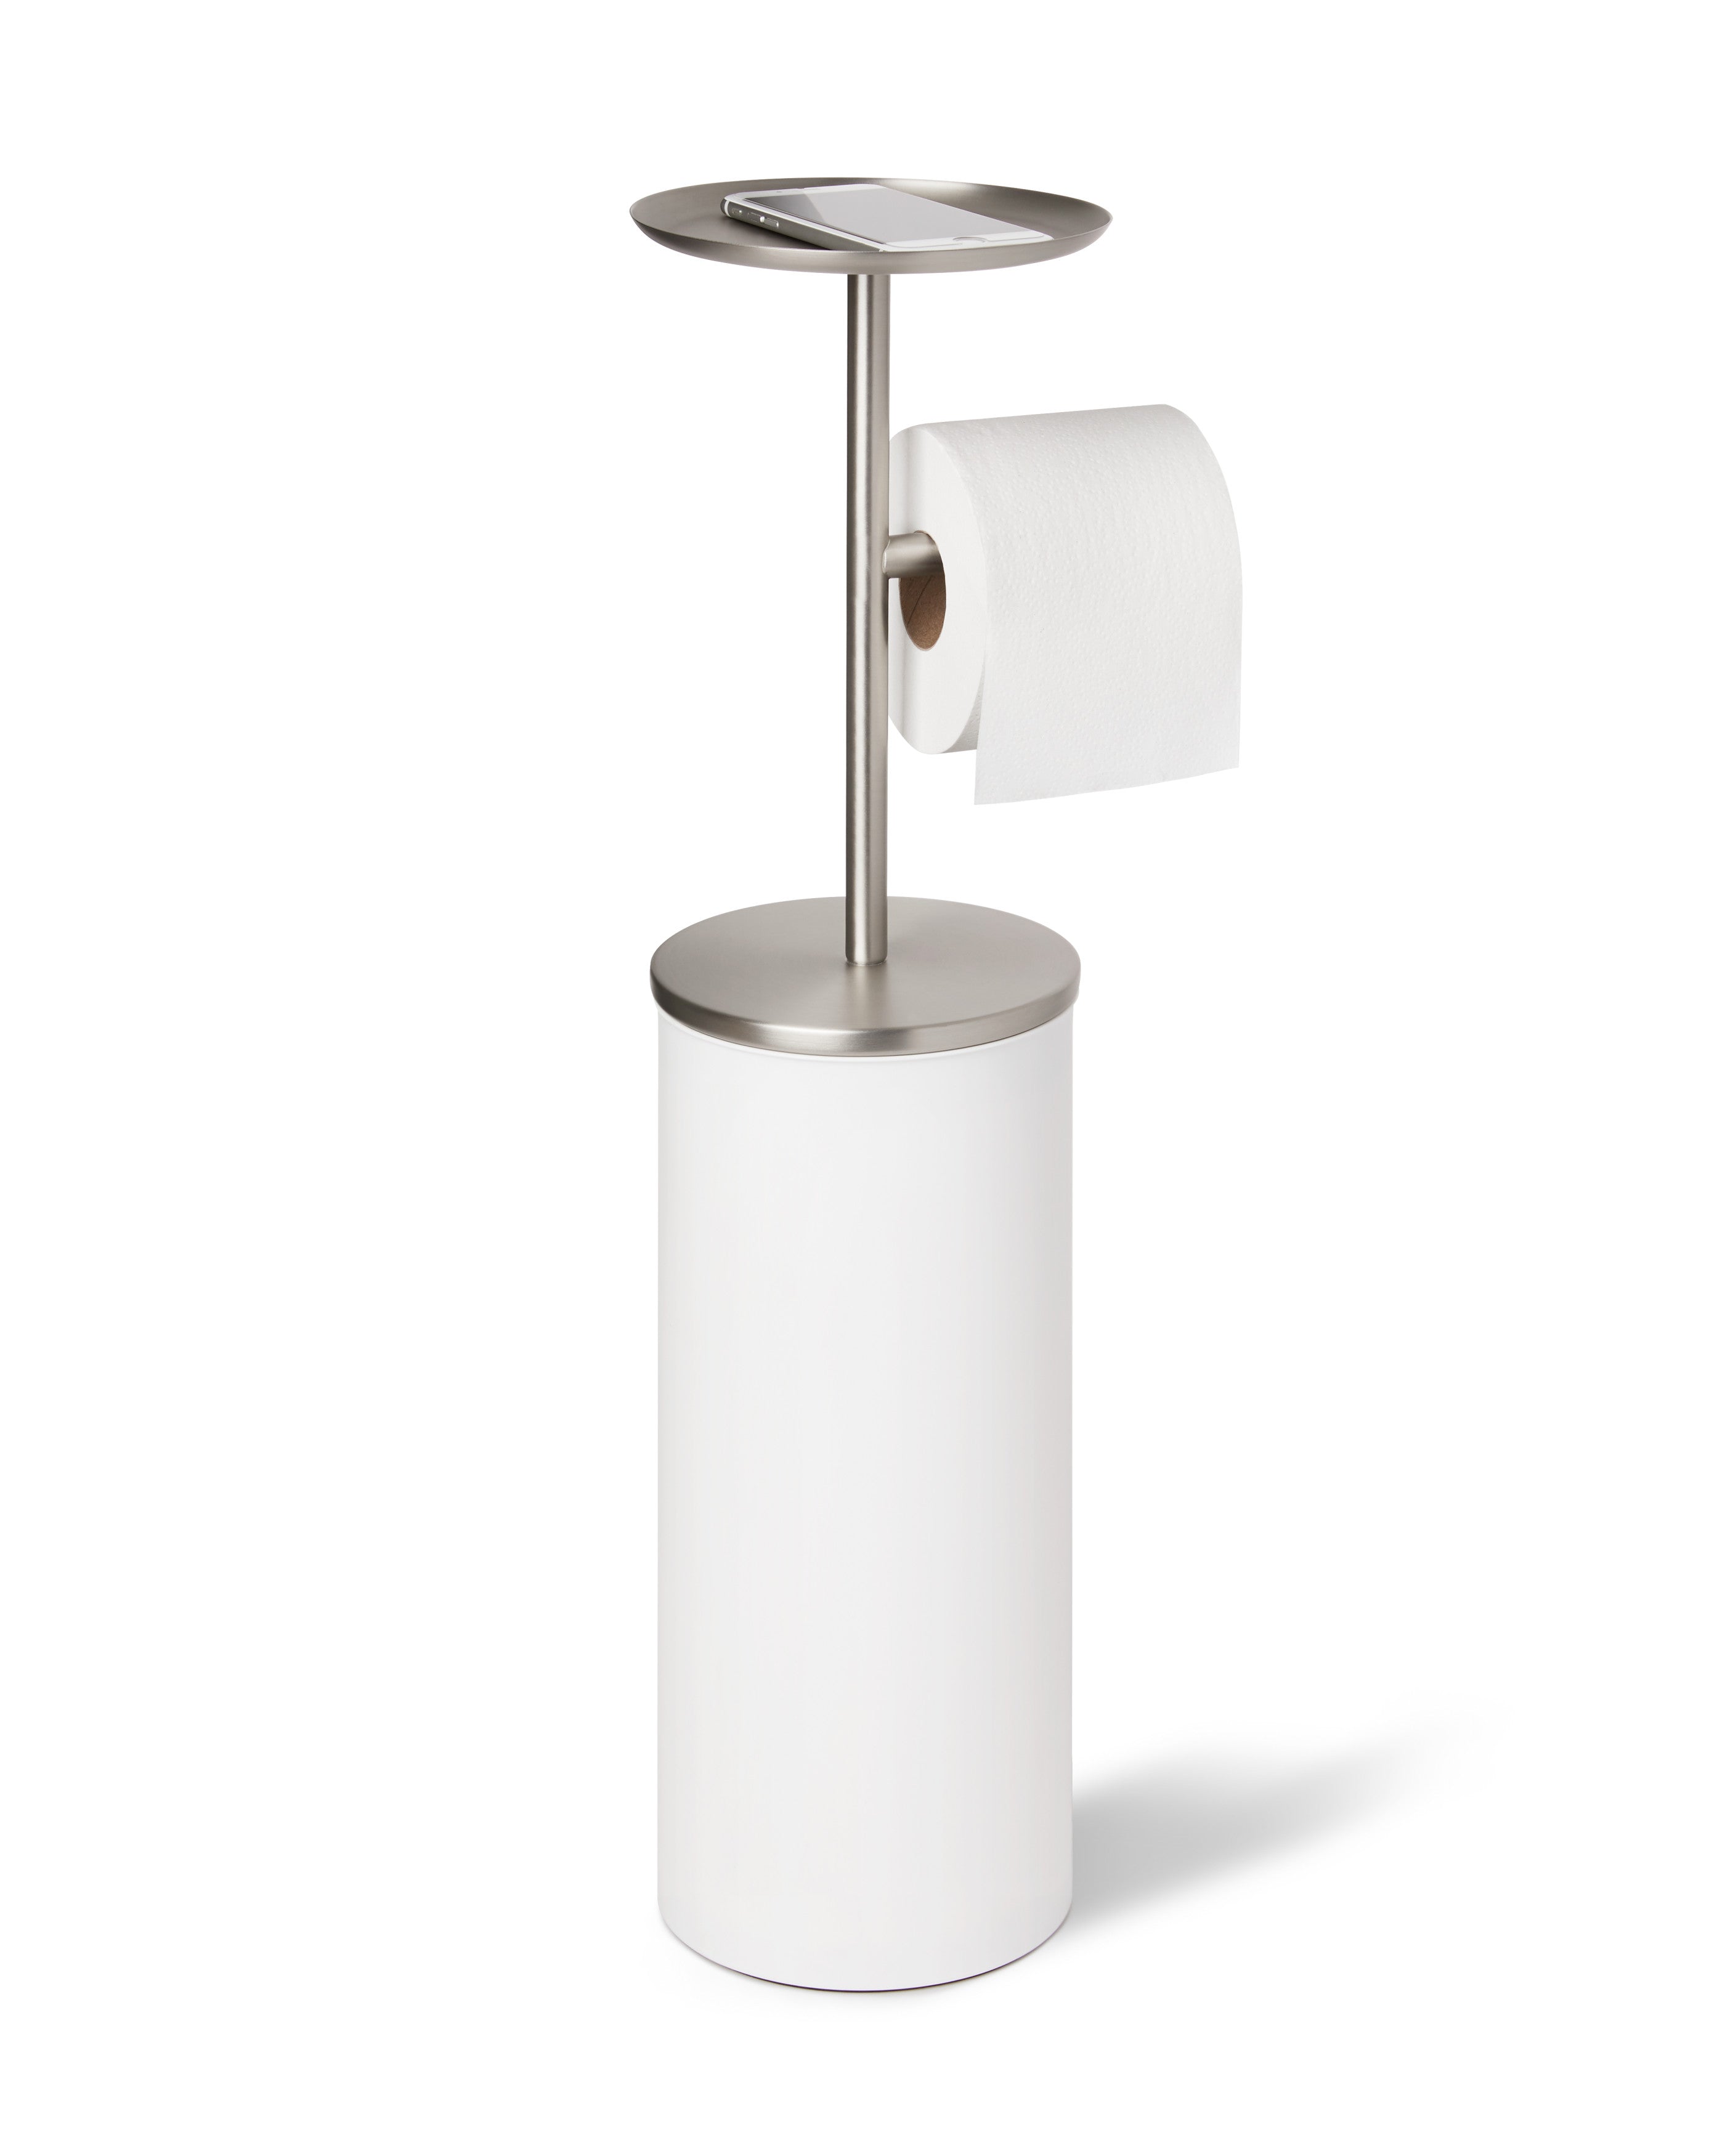 Portaloo Toilet Paper Stand - | & Umbra Stylish Convenient